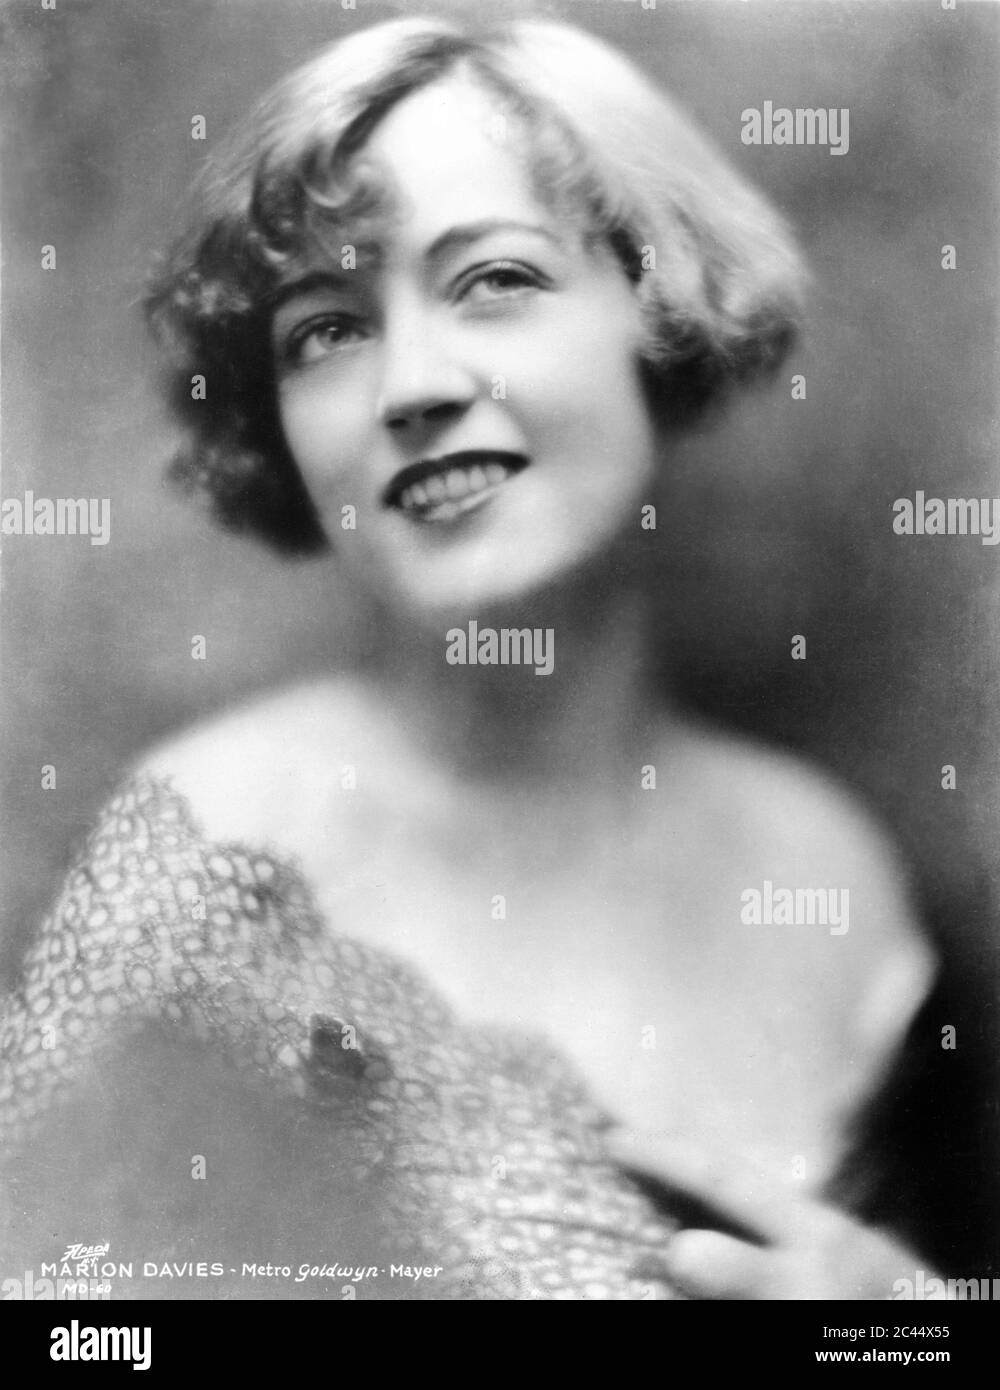 MARION DAVIES Portrait circa 1925 Metro Goldwyn Mayer Publicity Stock Photo